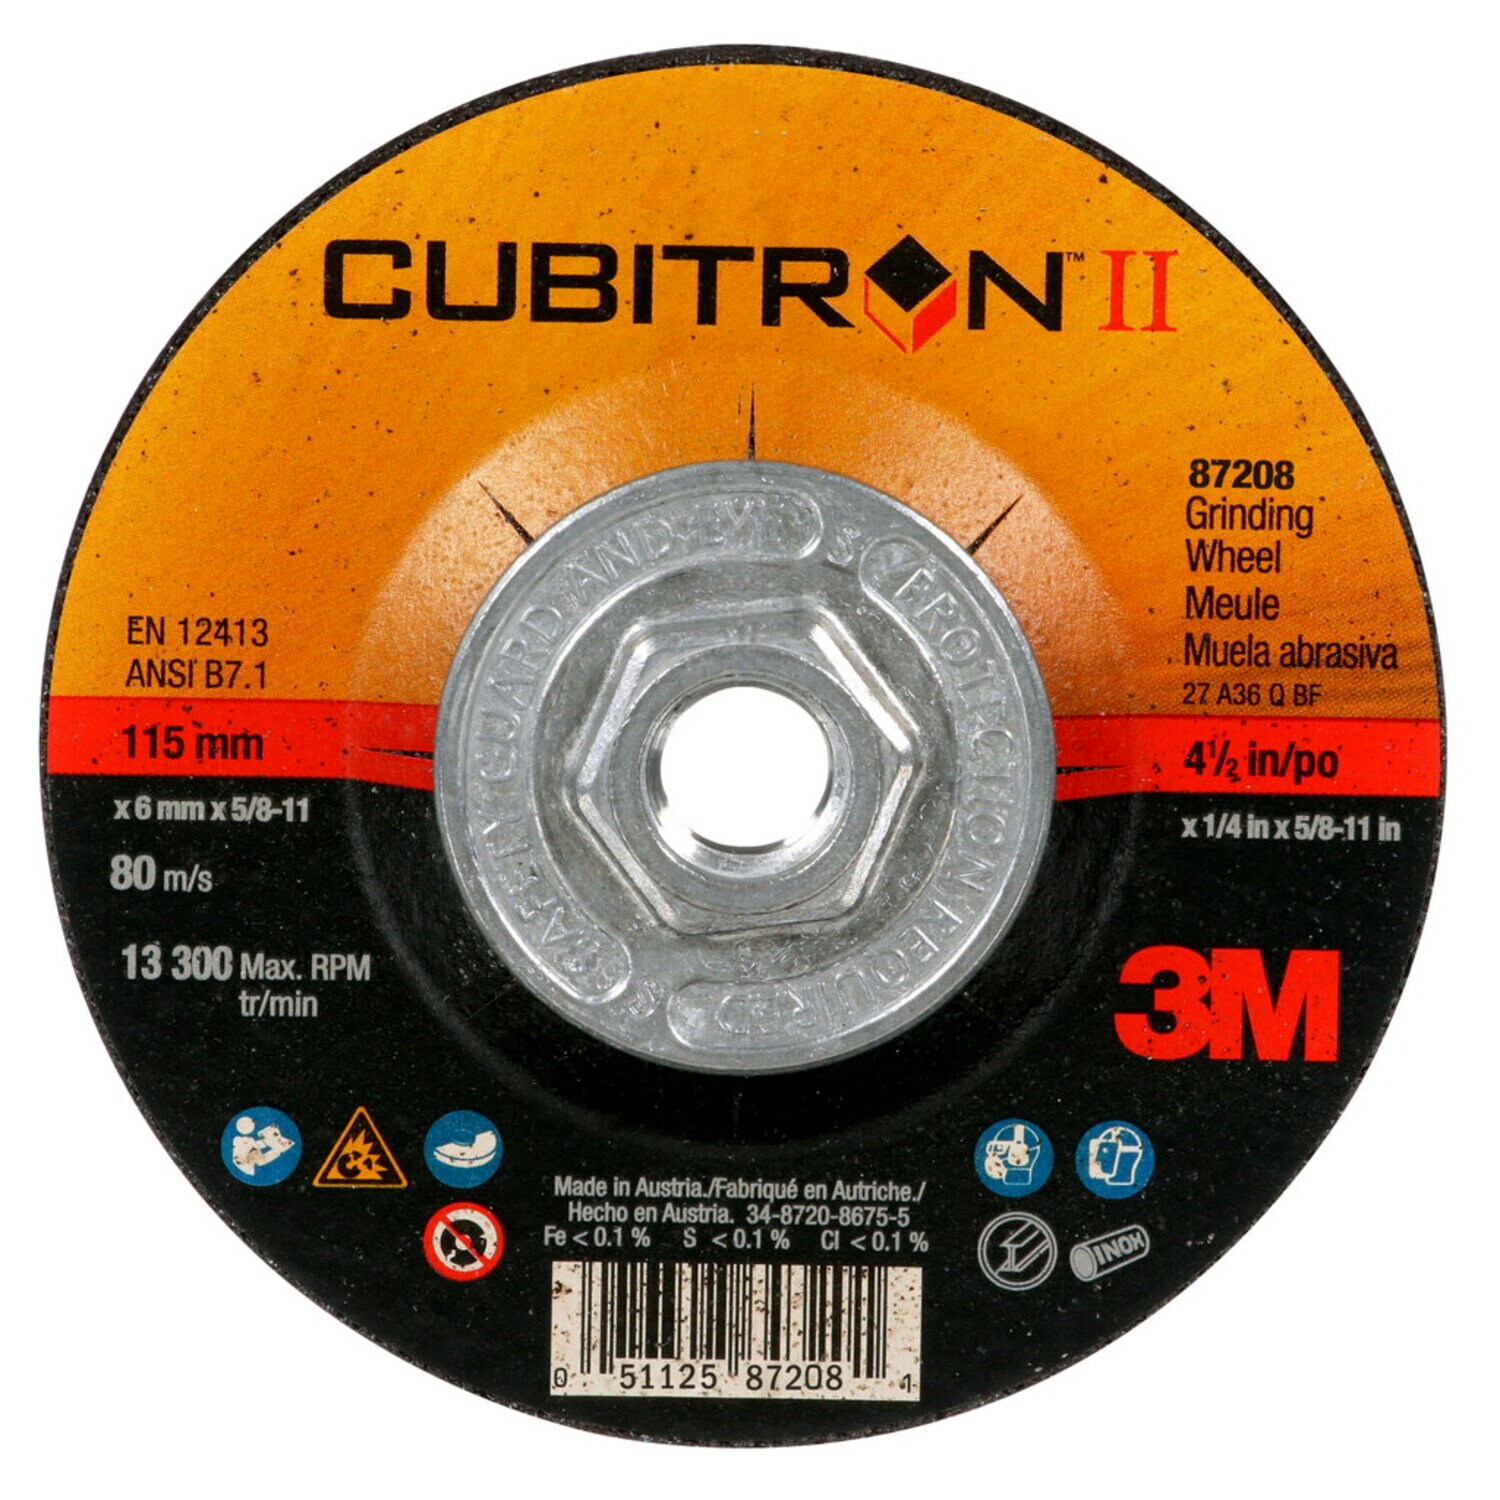 7100259904 - 3M Cubitron II Depressed Center Grinding Wheel, 87208, Type 27, 4-1/2
in x 1/4 in x 5/8 in-11, 10 ea/Case, Single Pack